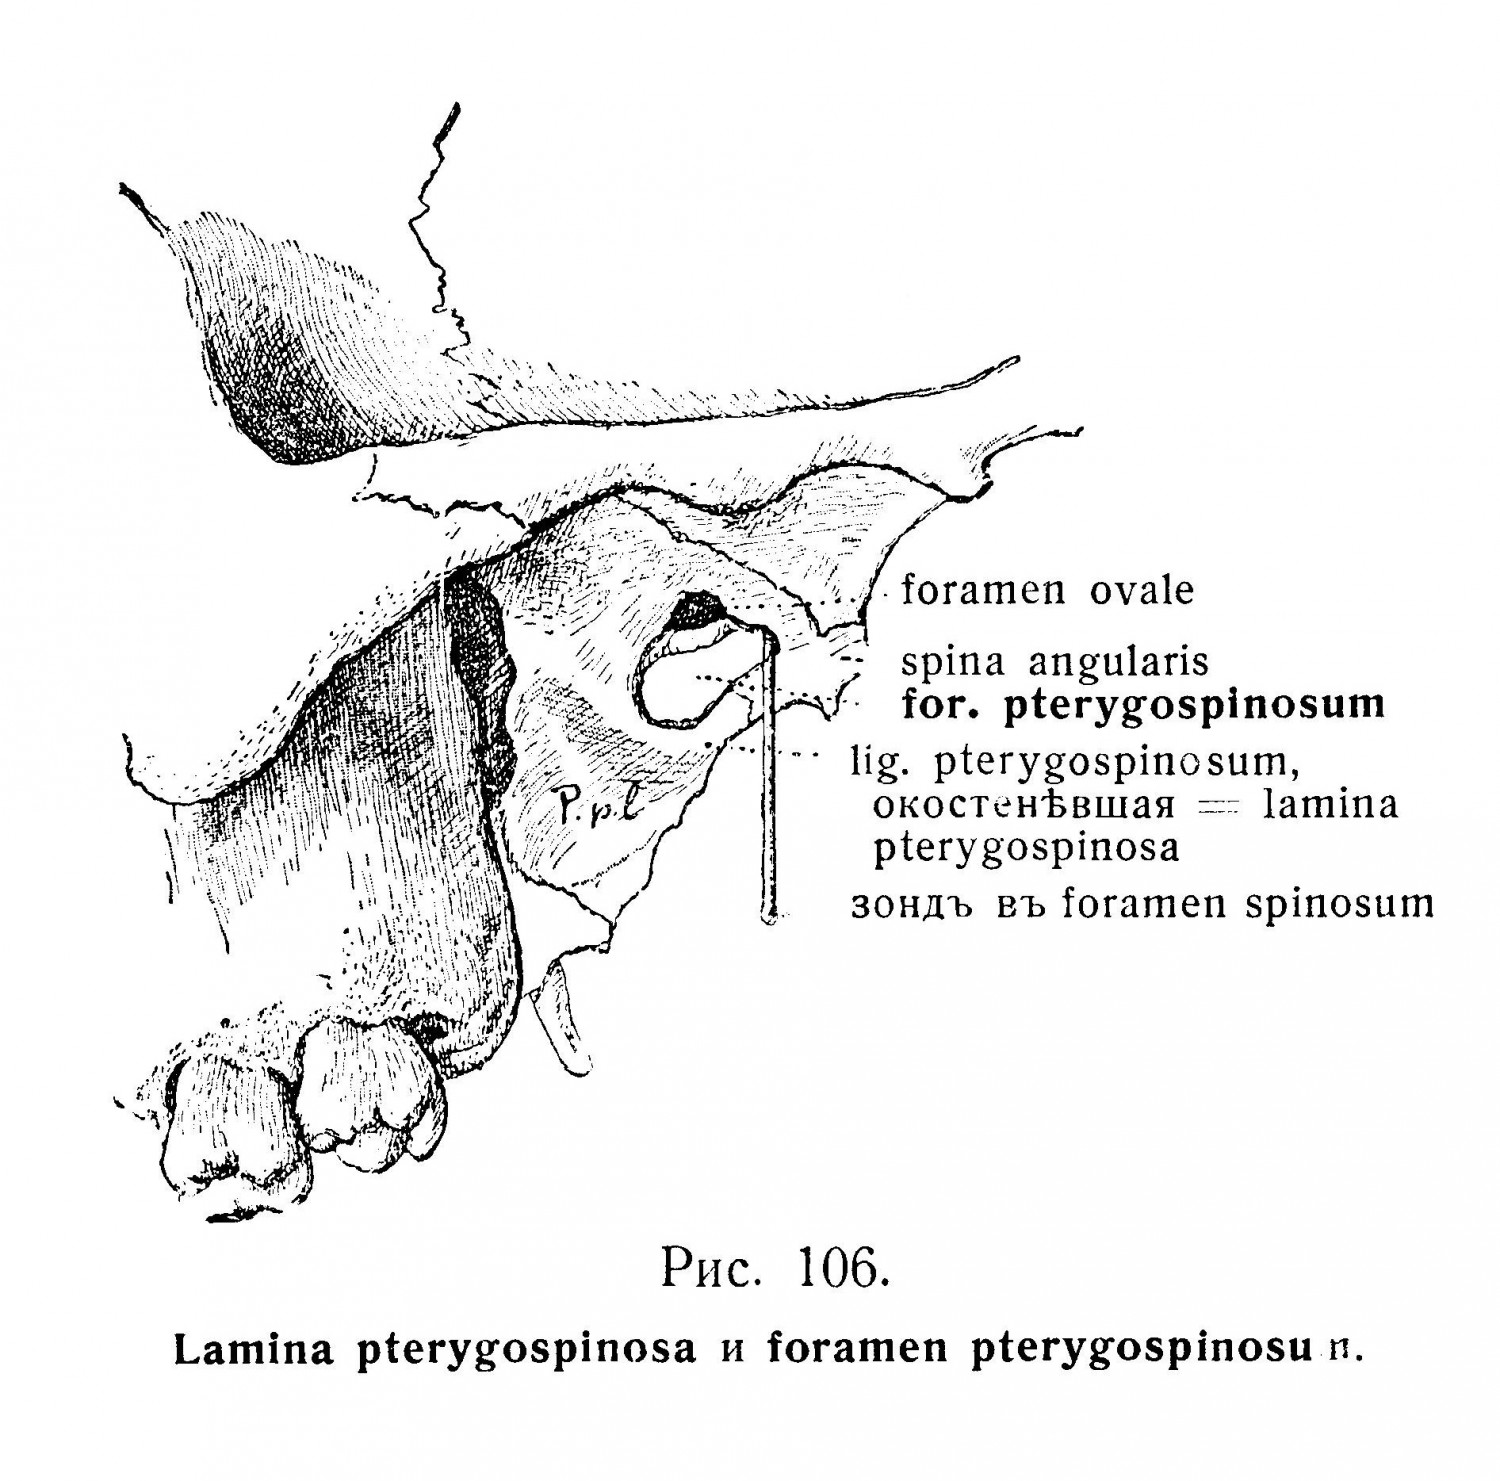 Lamina pterygospinosa и foramen pterygospinosu n.